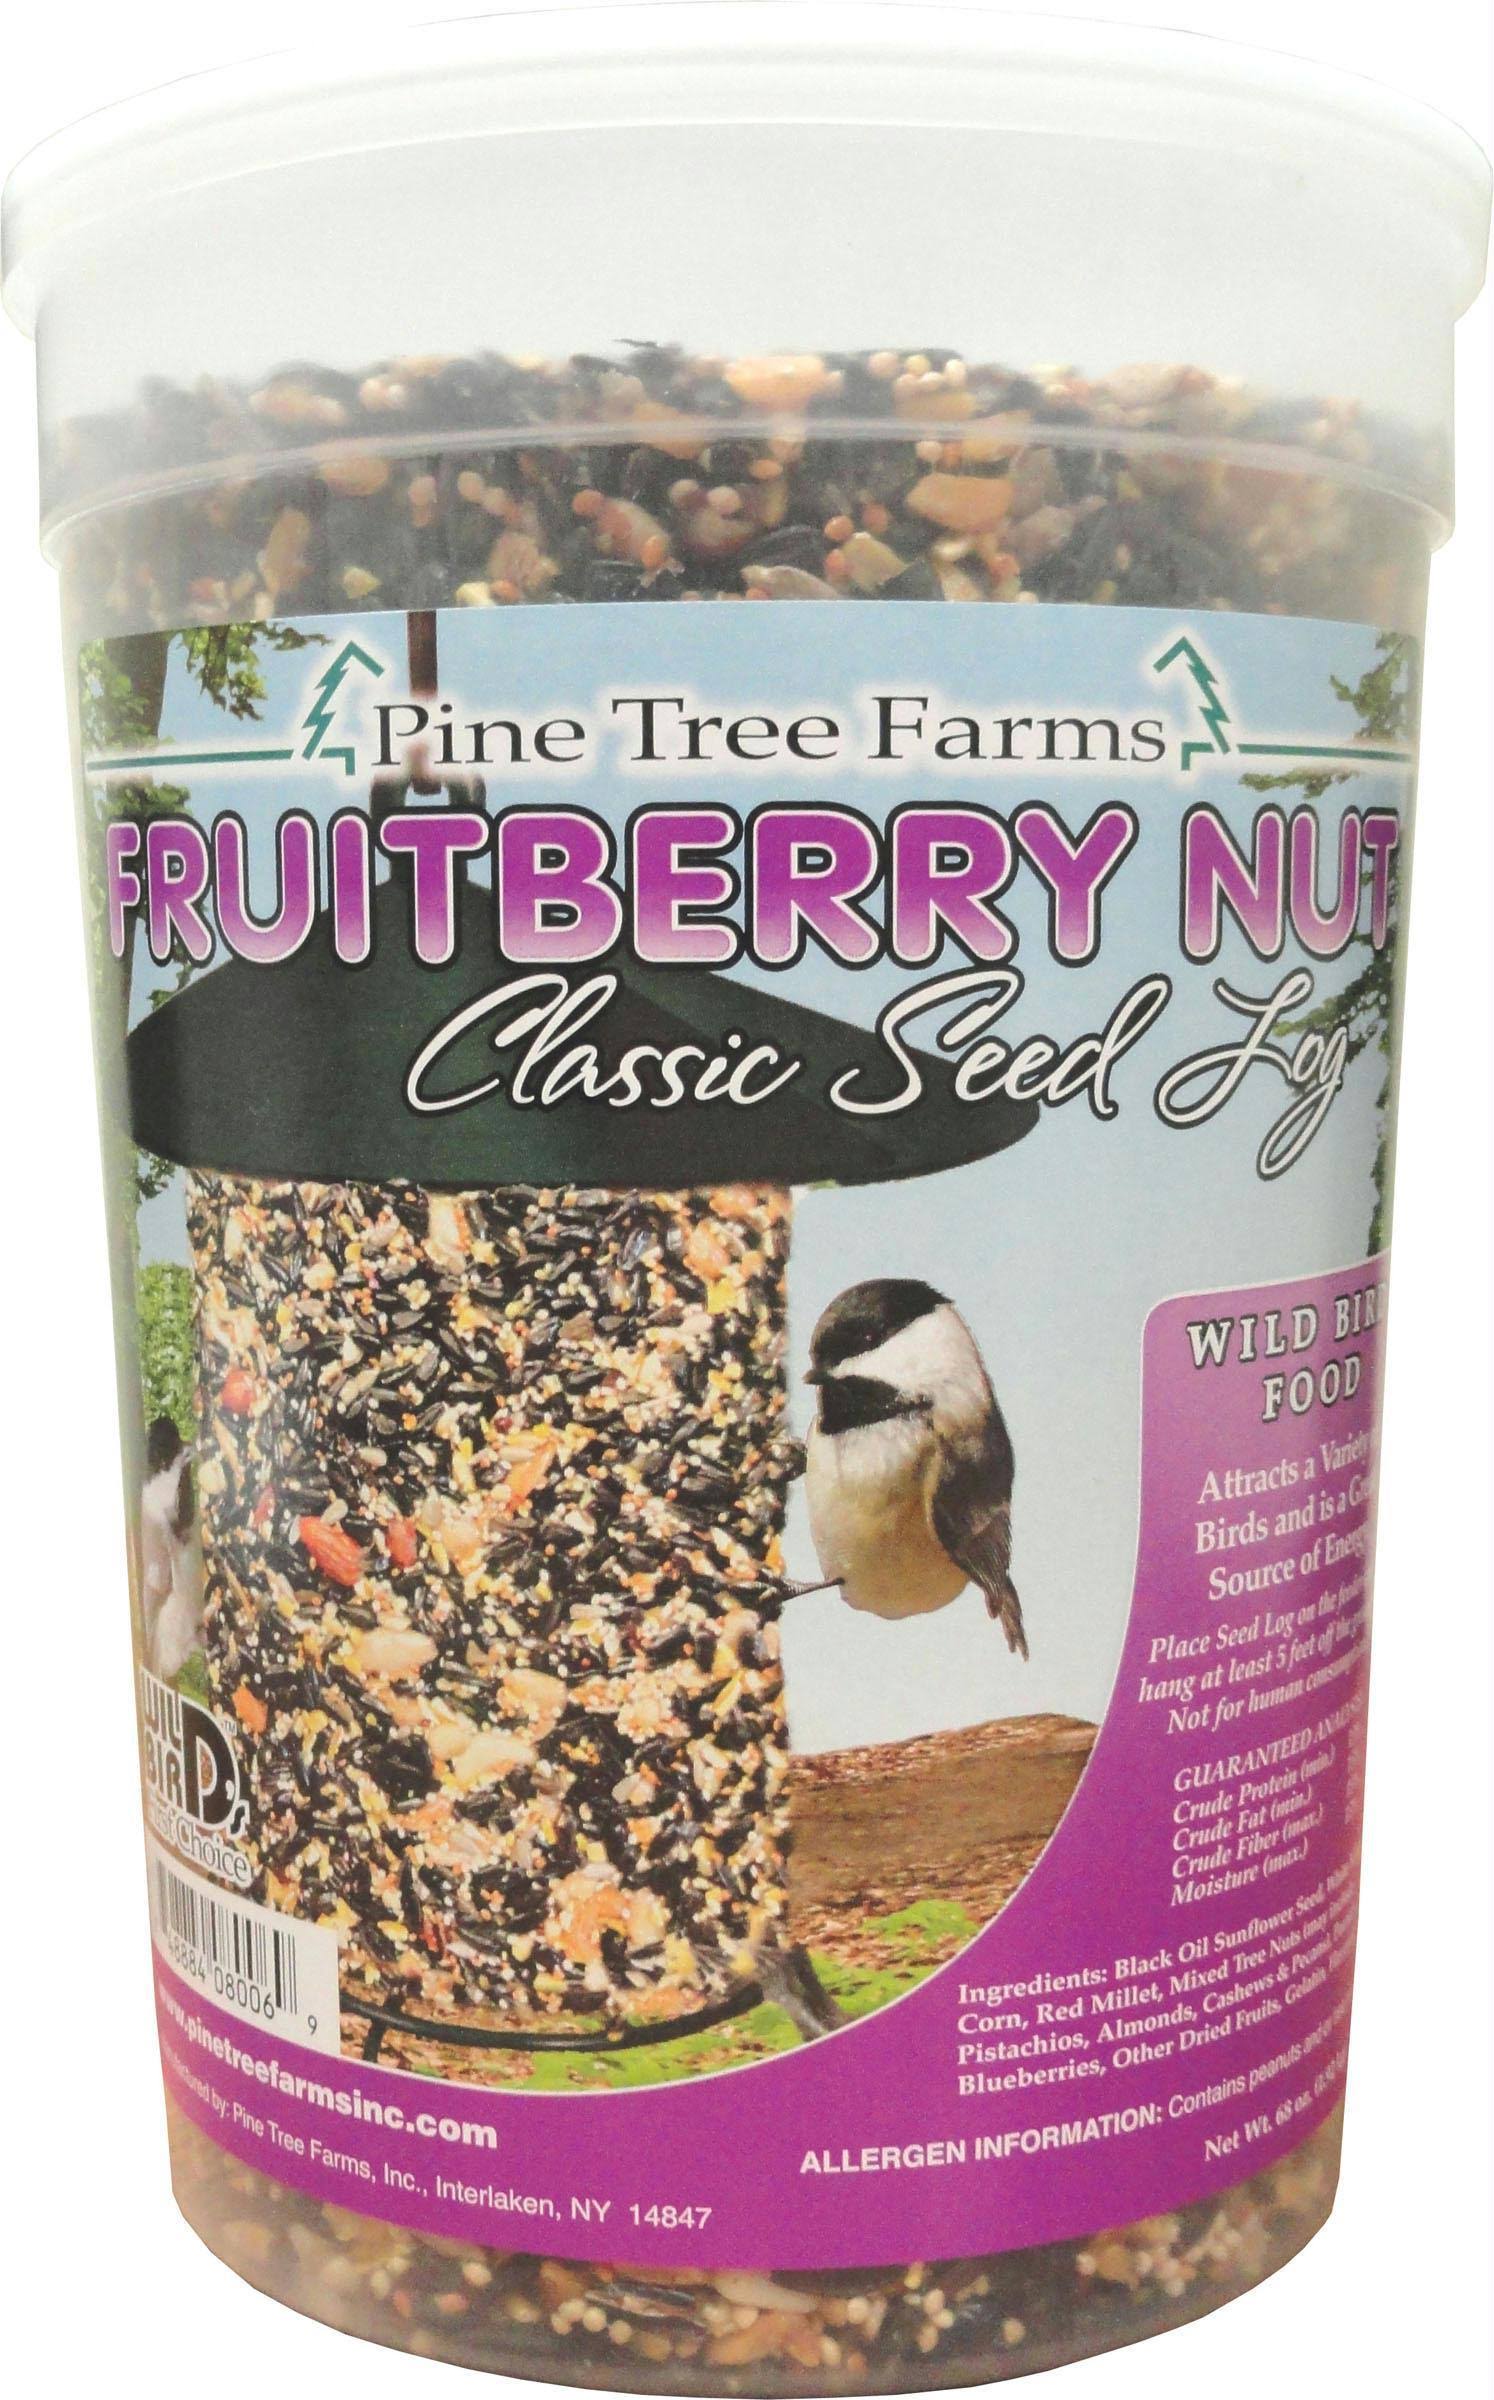 Pine Tree Farms Fruit Berry Nut Seed Log - 72 oz